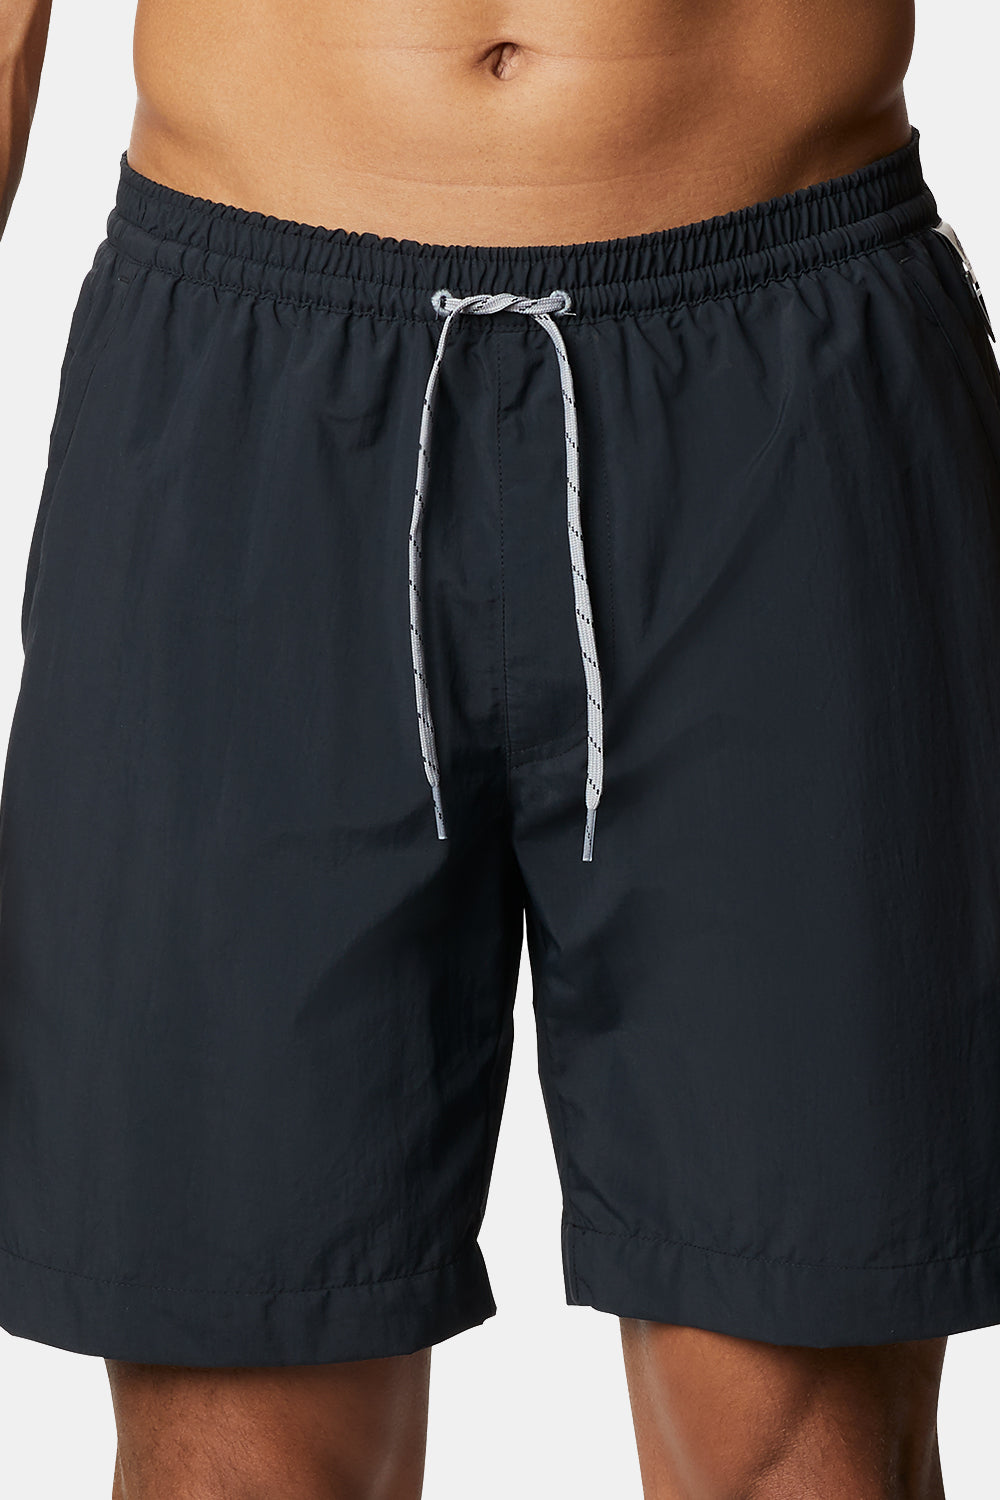 Columbia Summerdry Shorts (Black)
